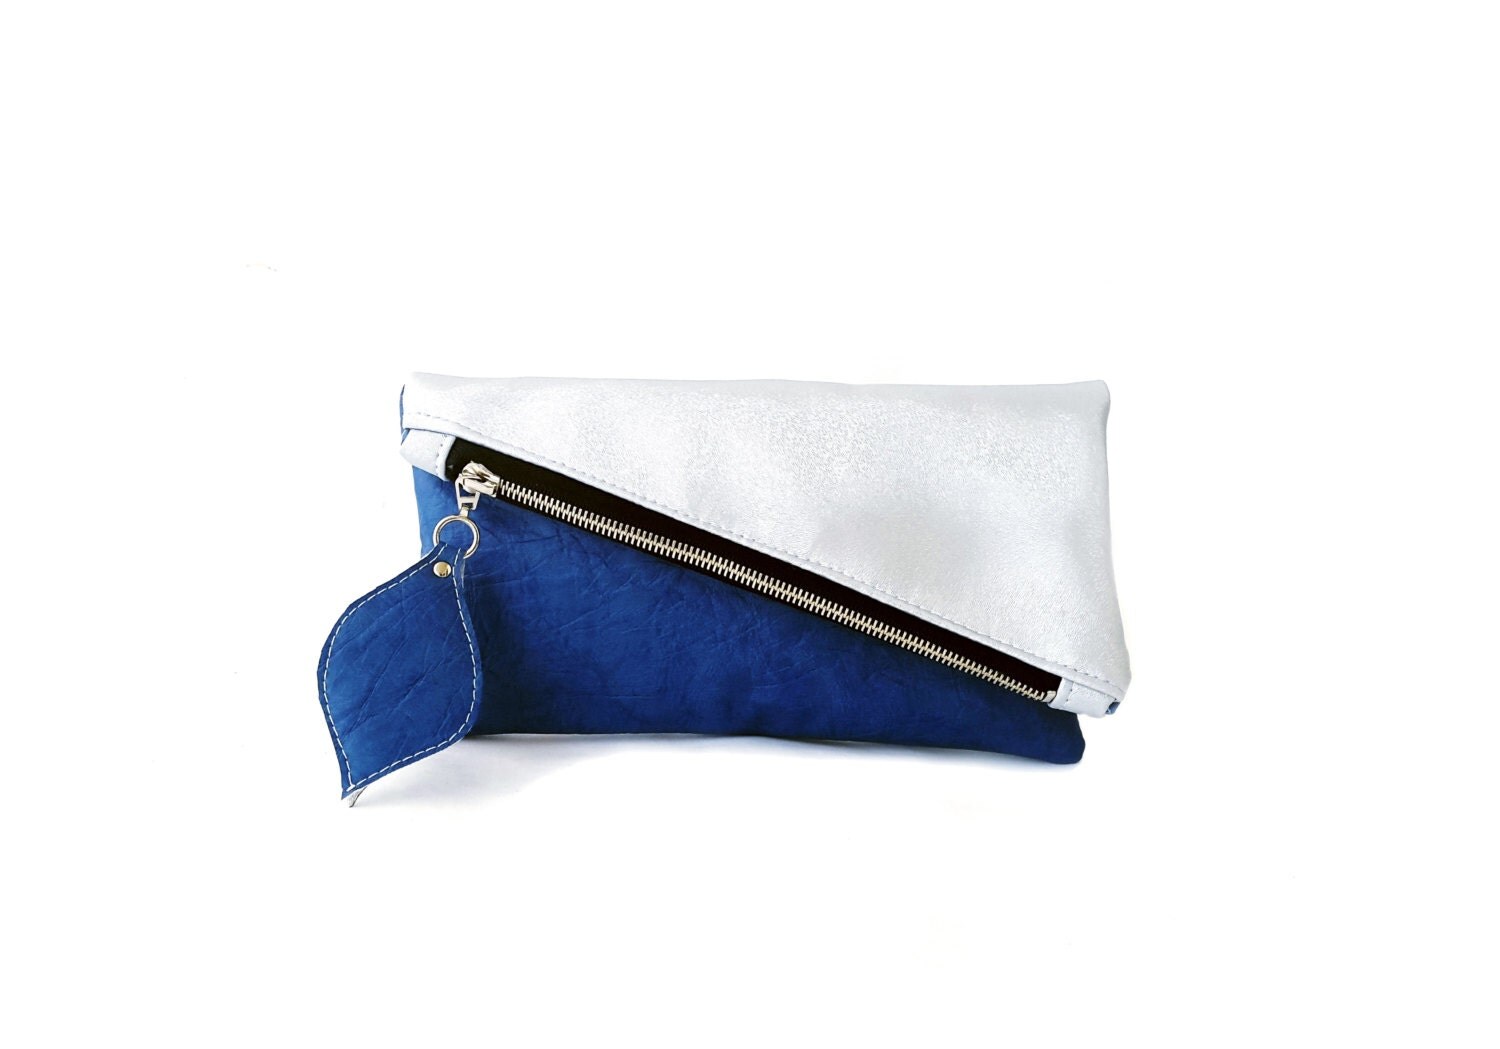 Silver and blue leather clutch purse geometric clutch bag